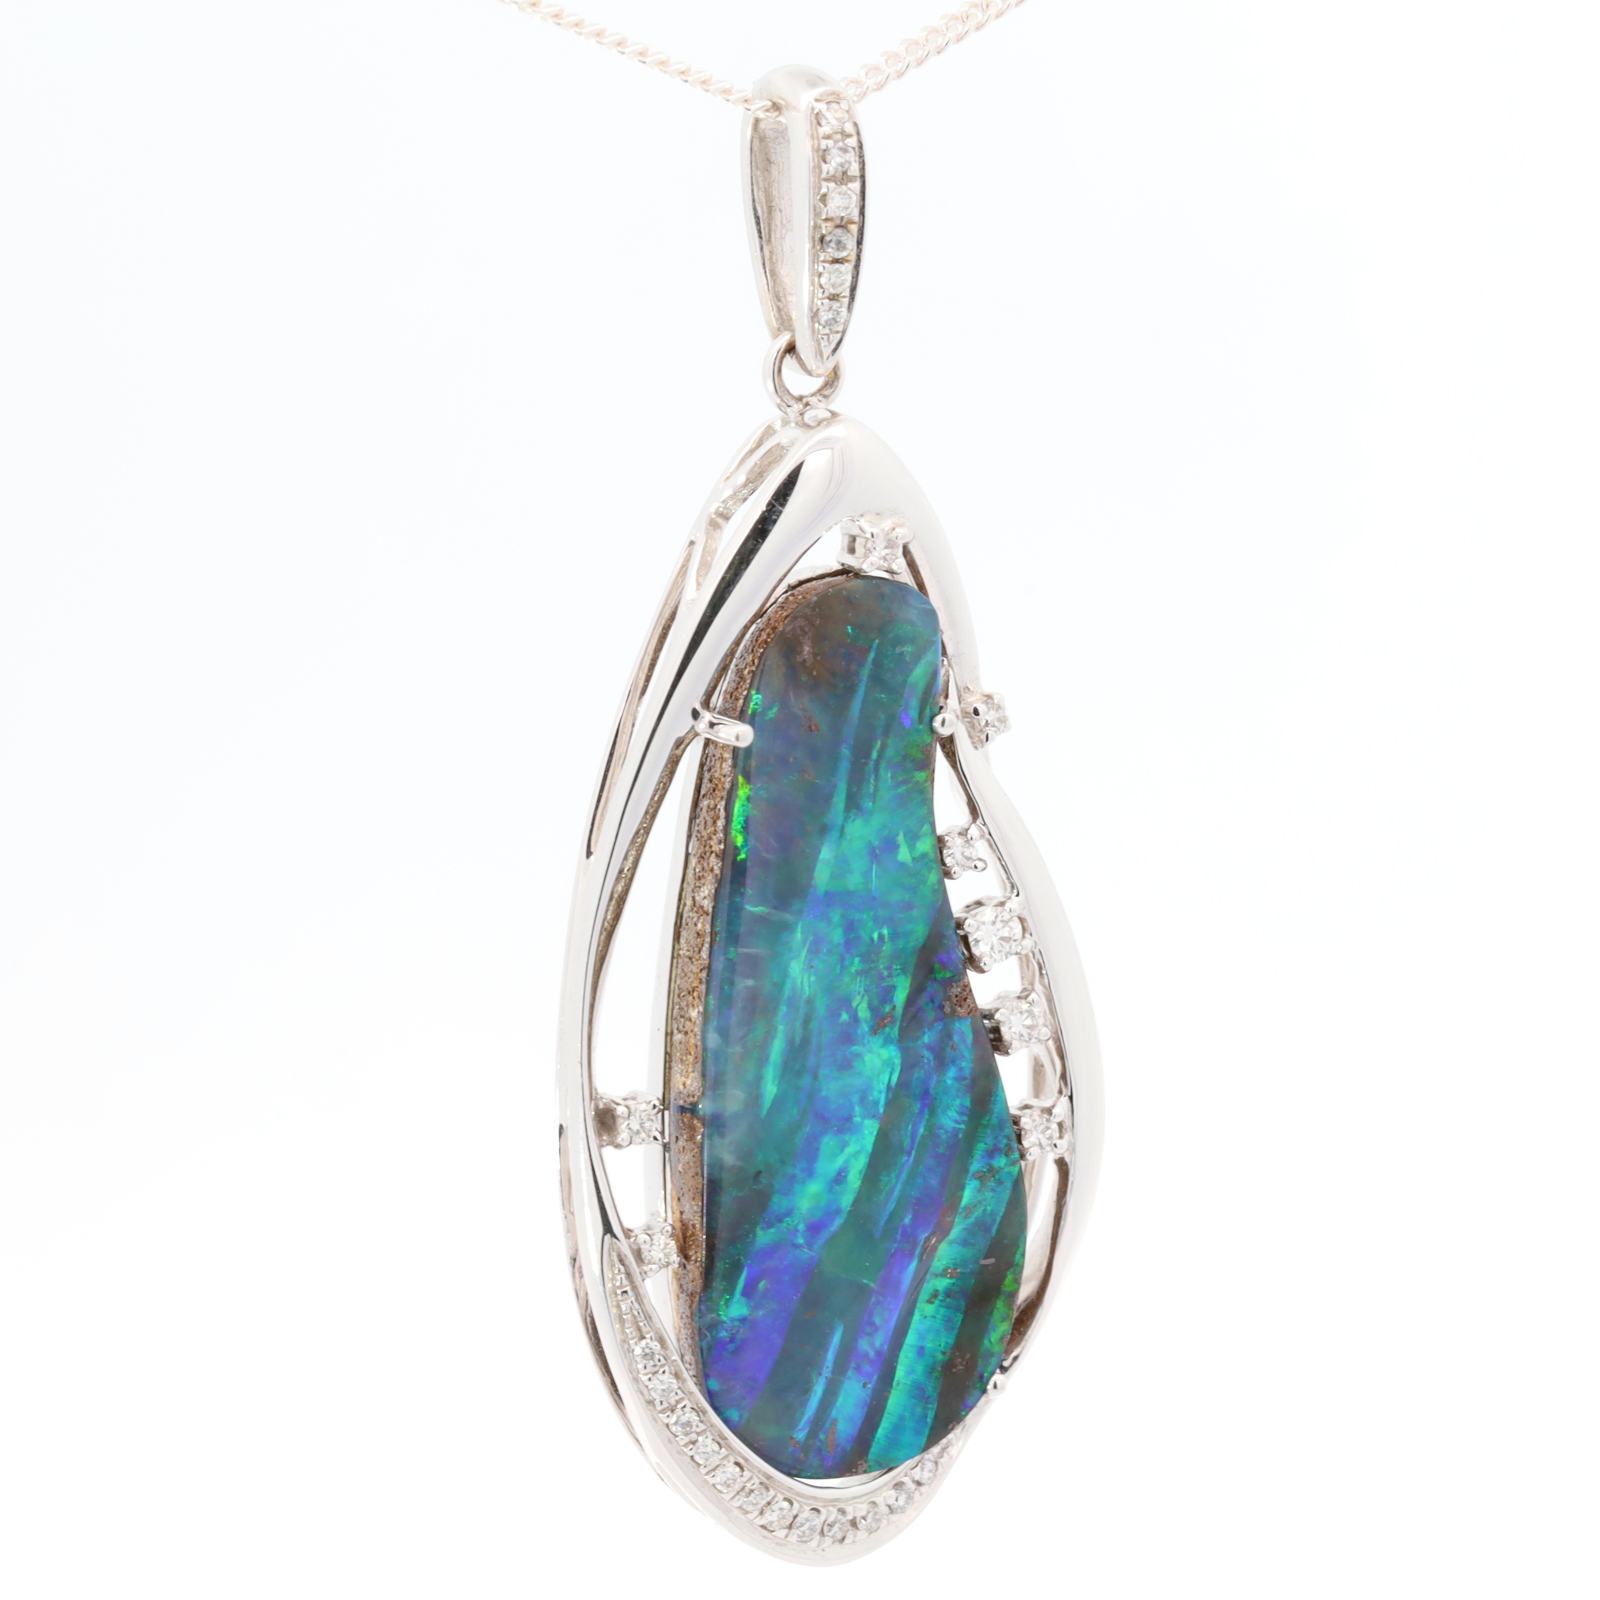 Premium White Gold Blue Green Solid Australian Boulder Opal Necklace Pendant with Diamonds